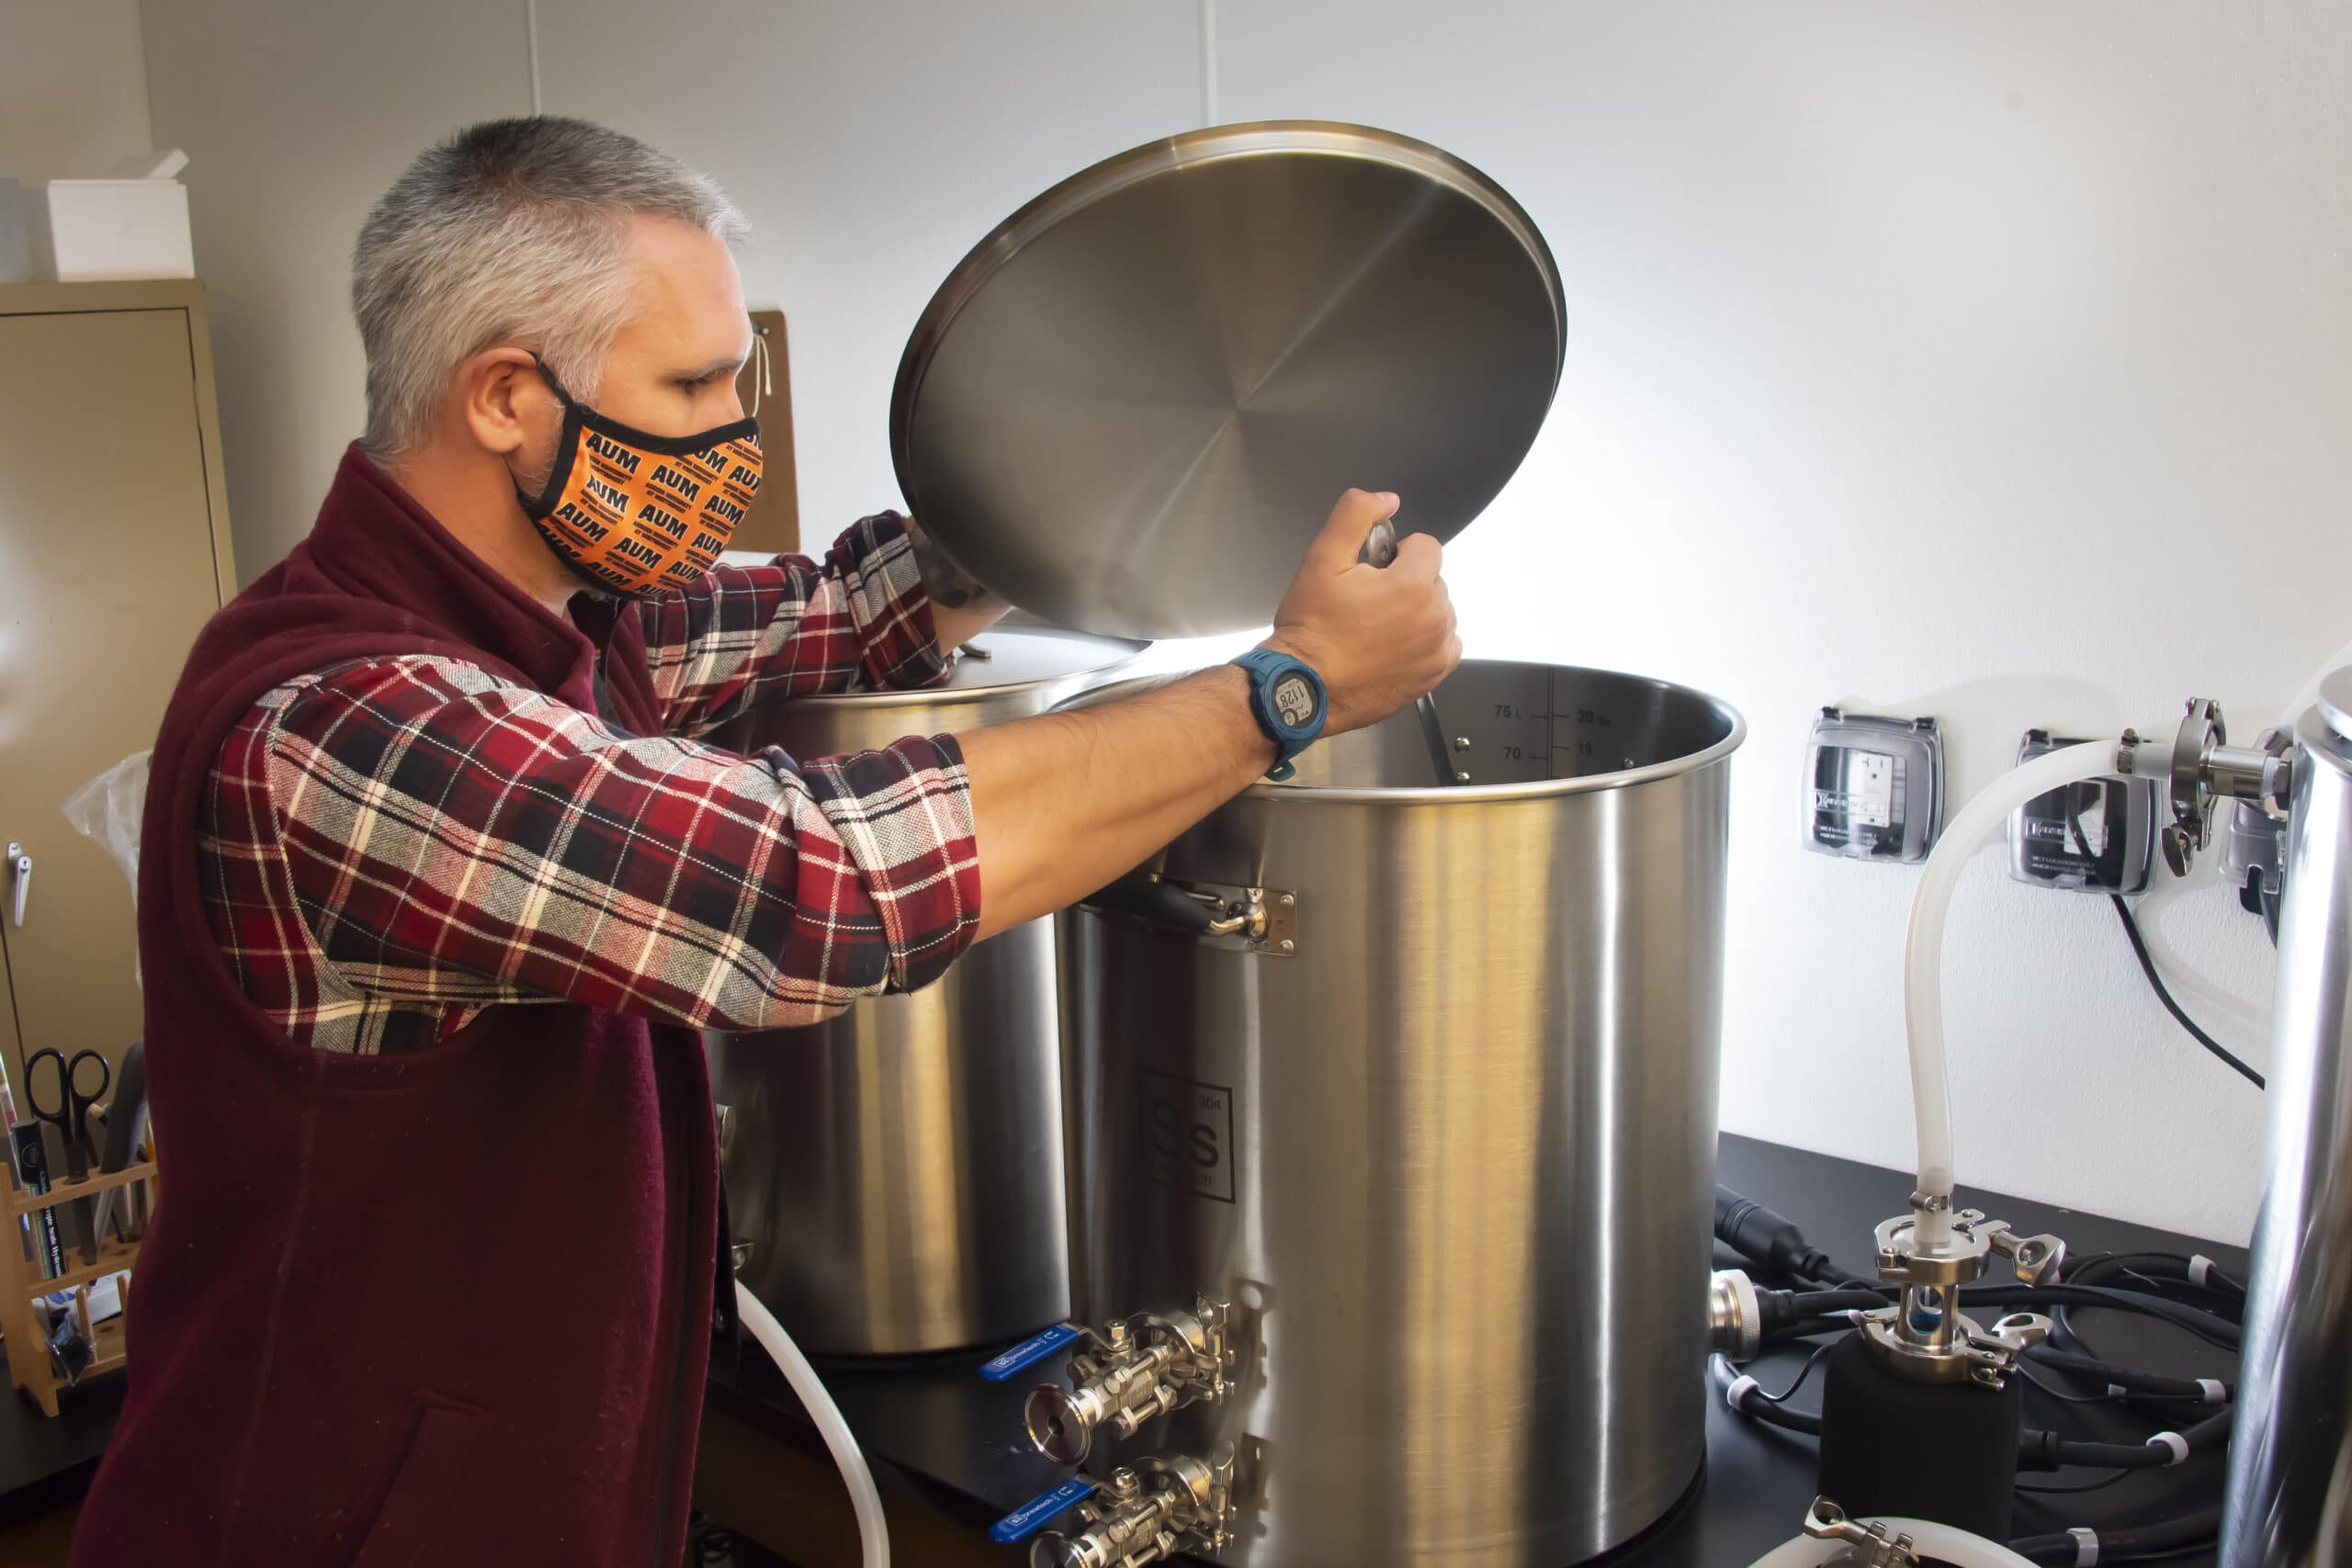 AUM fermentation program brews up new opportunities for students